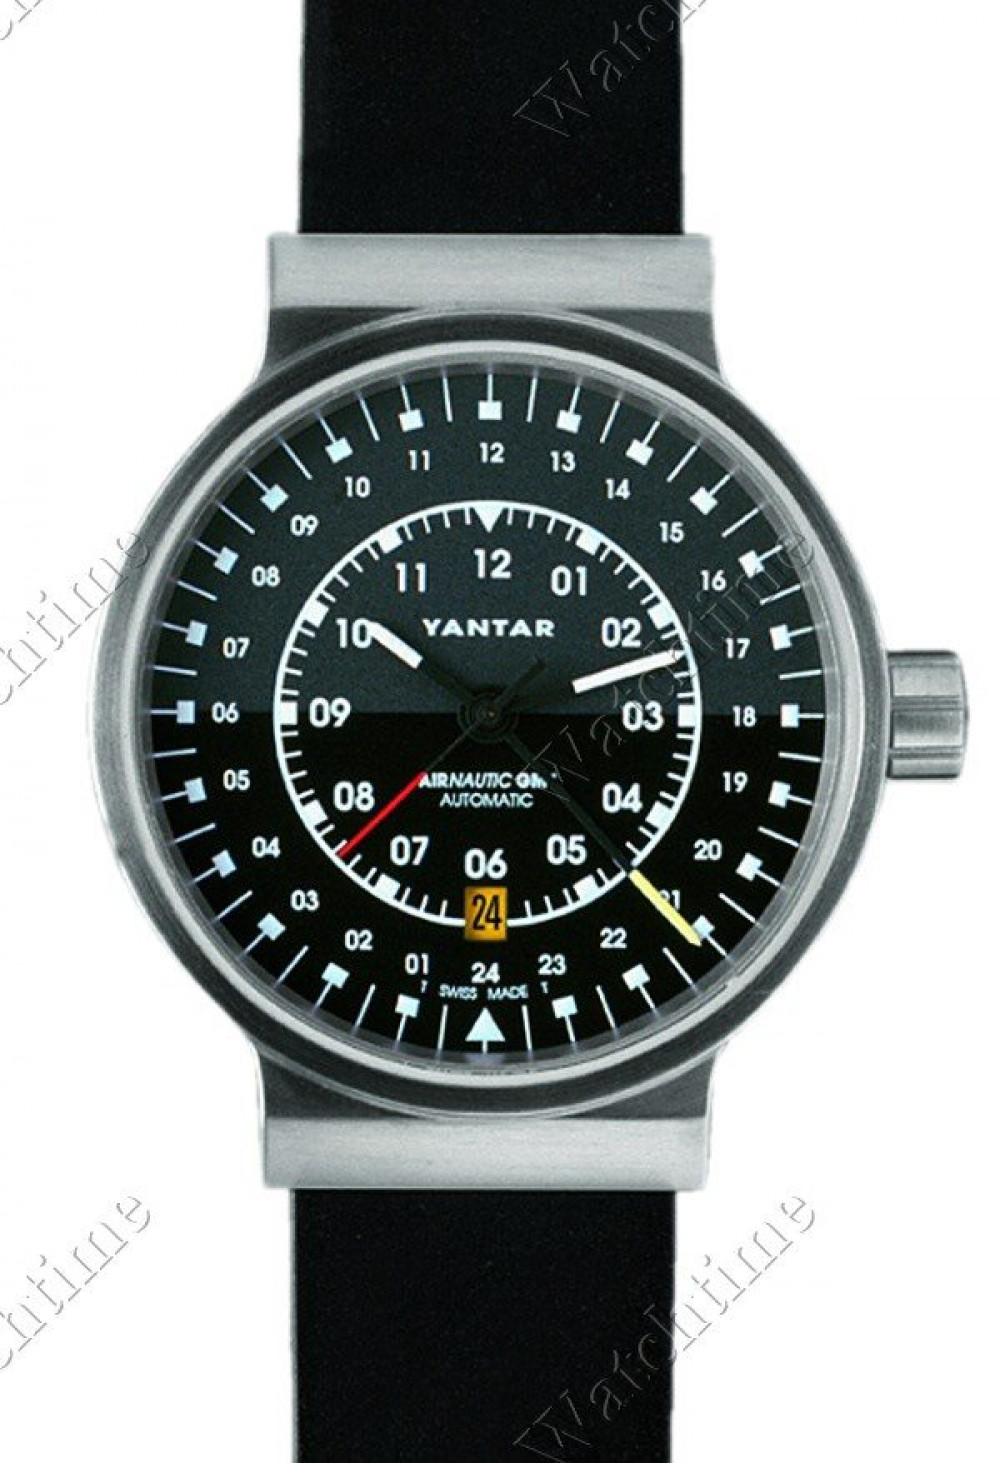 Zegarek firmy Yantar, model AIR Nautik GMT II